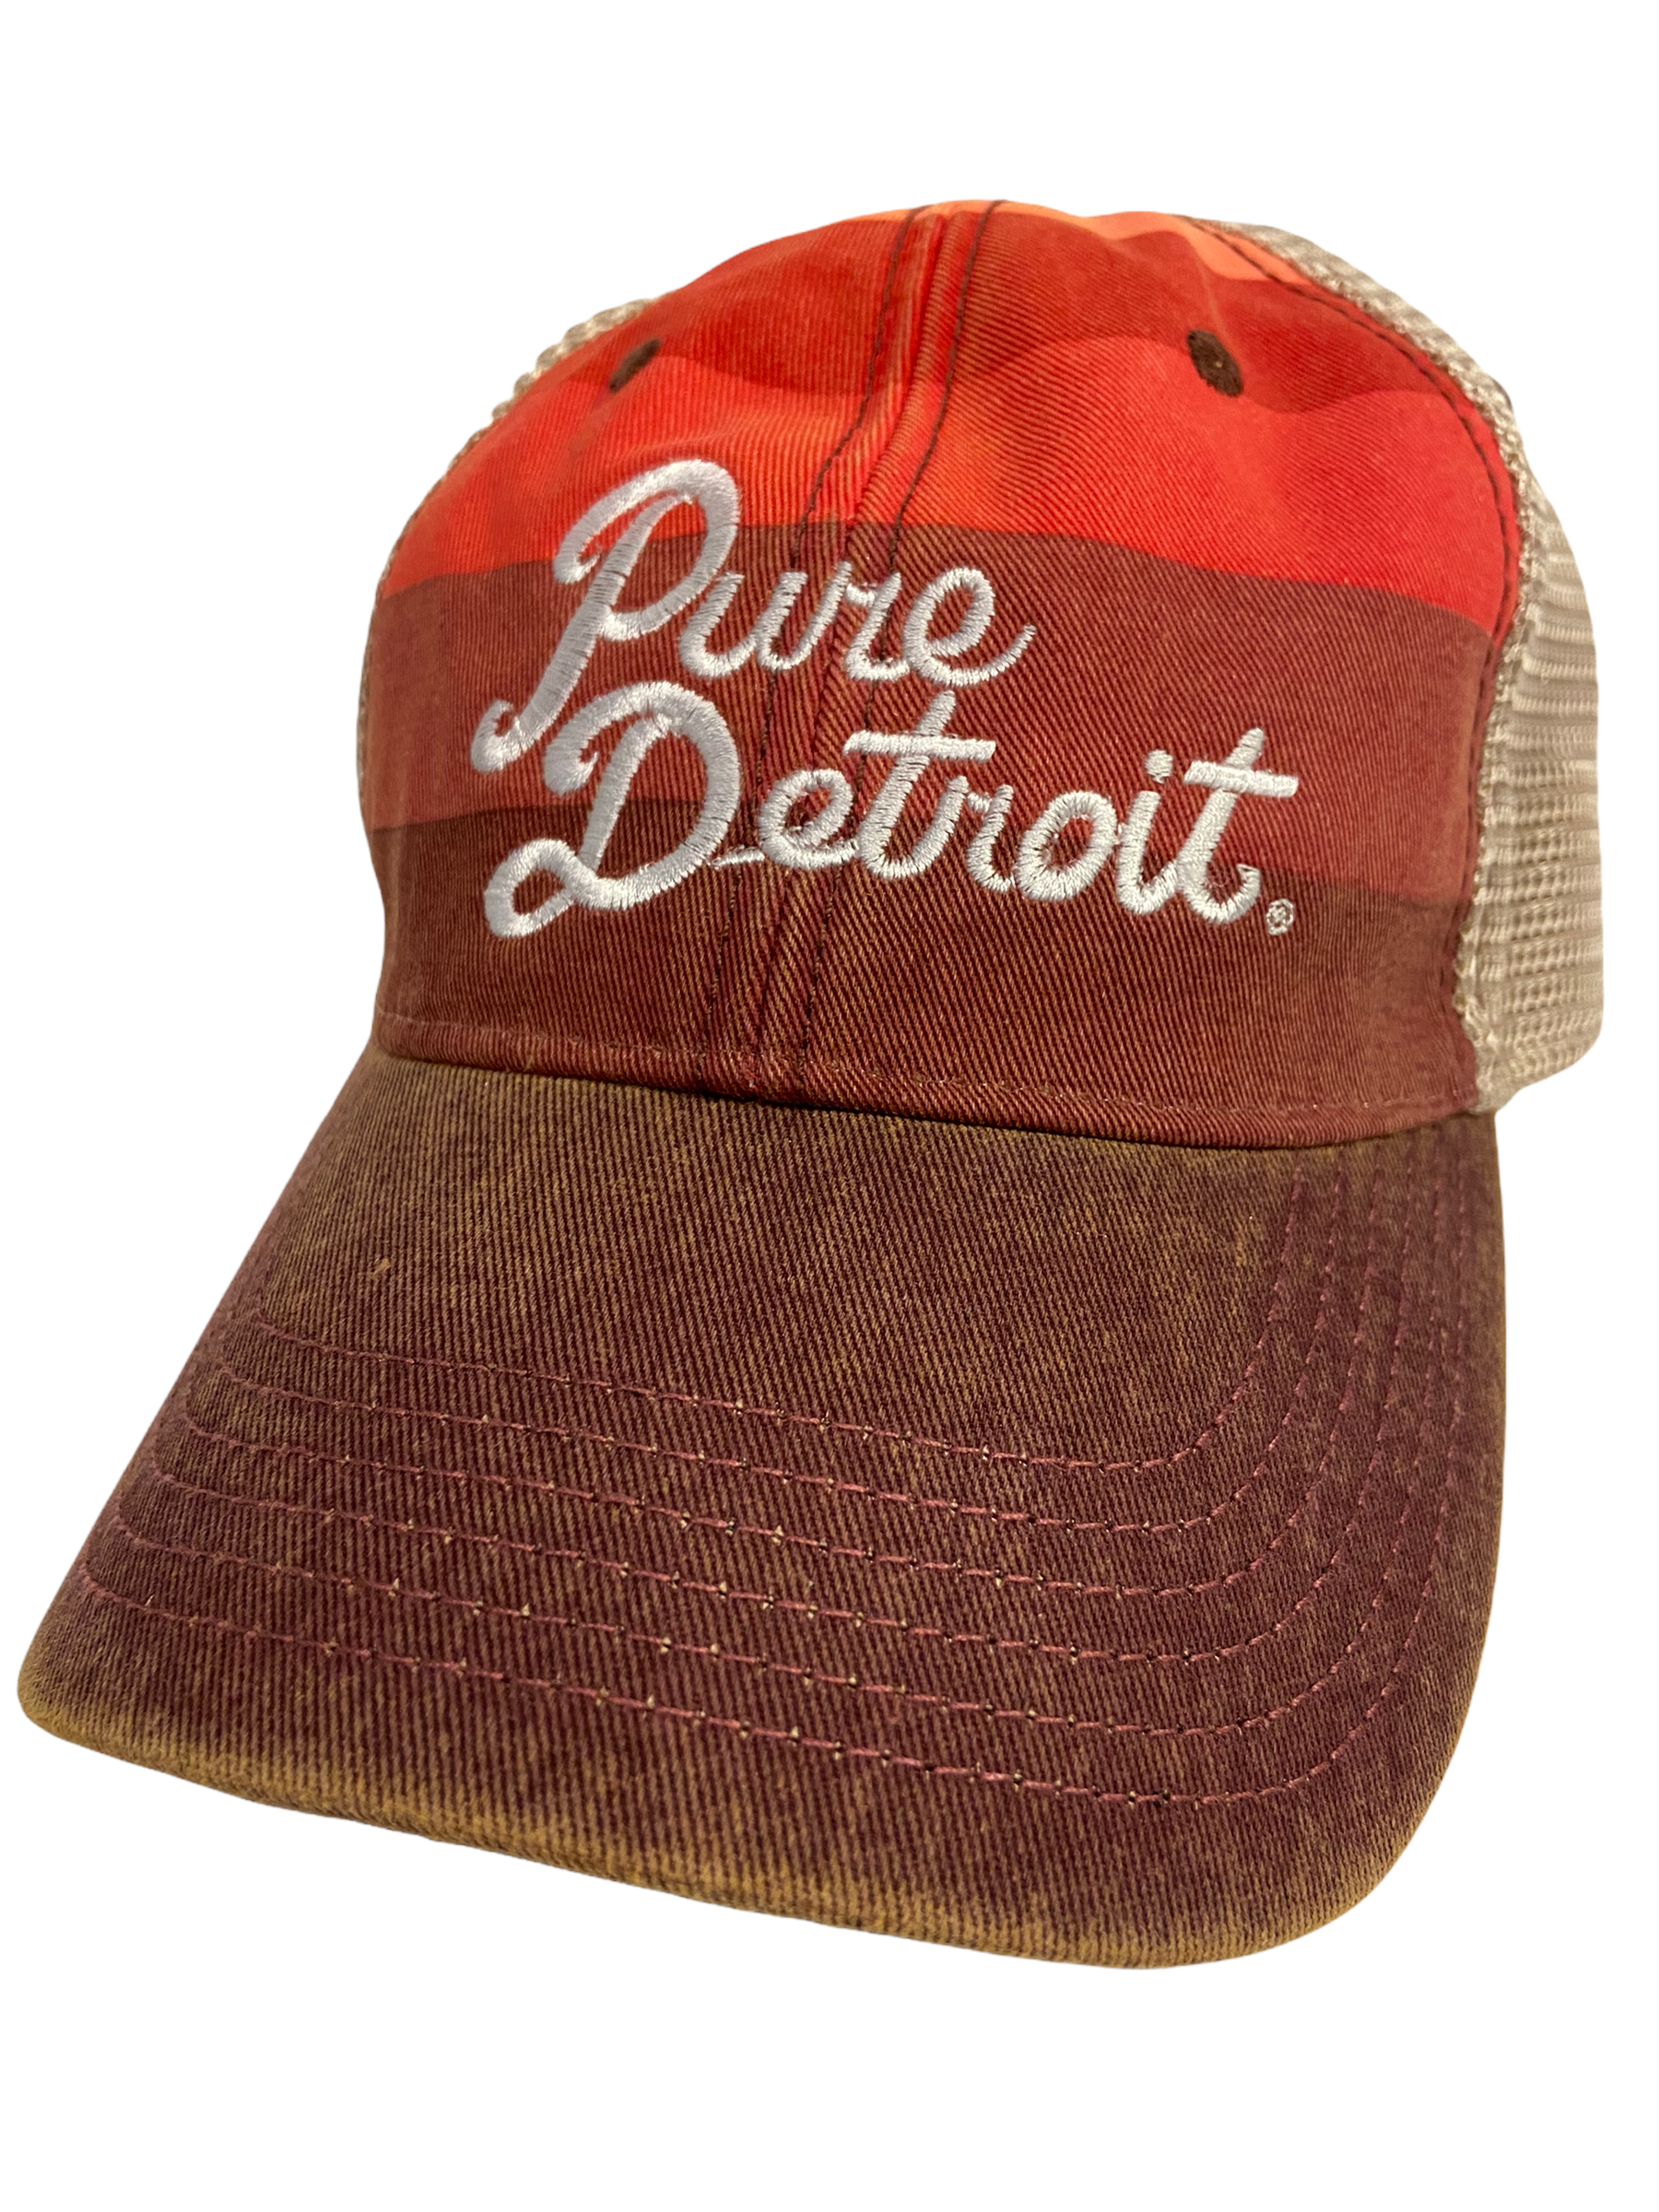 Pure Detroit Script Trucker Adjustable Hat / Unisex Hat White/Red Stripe  